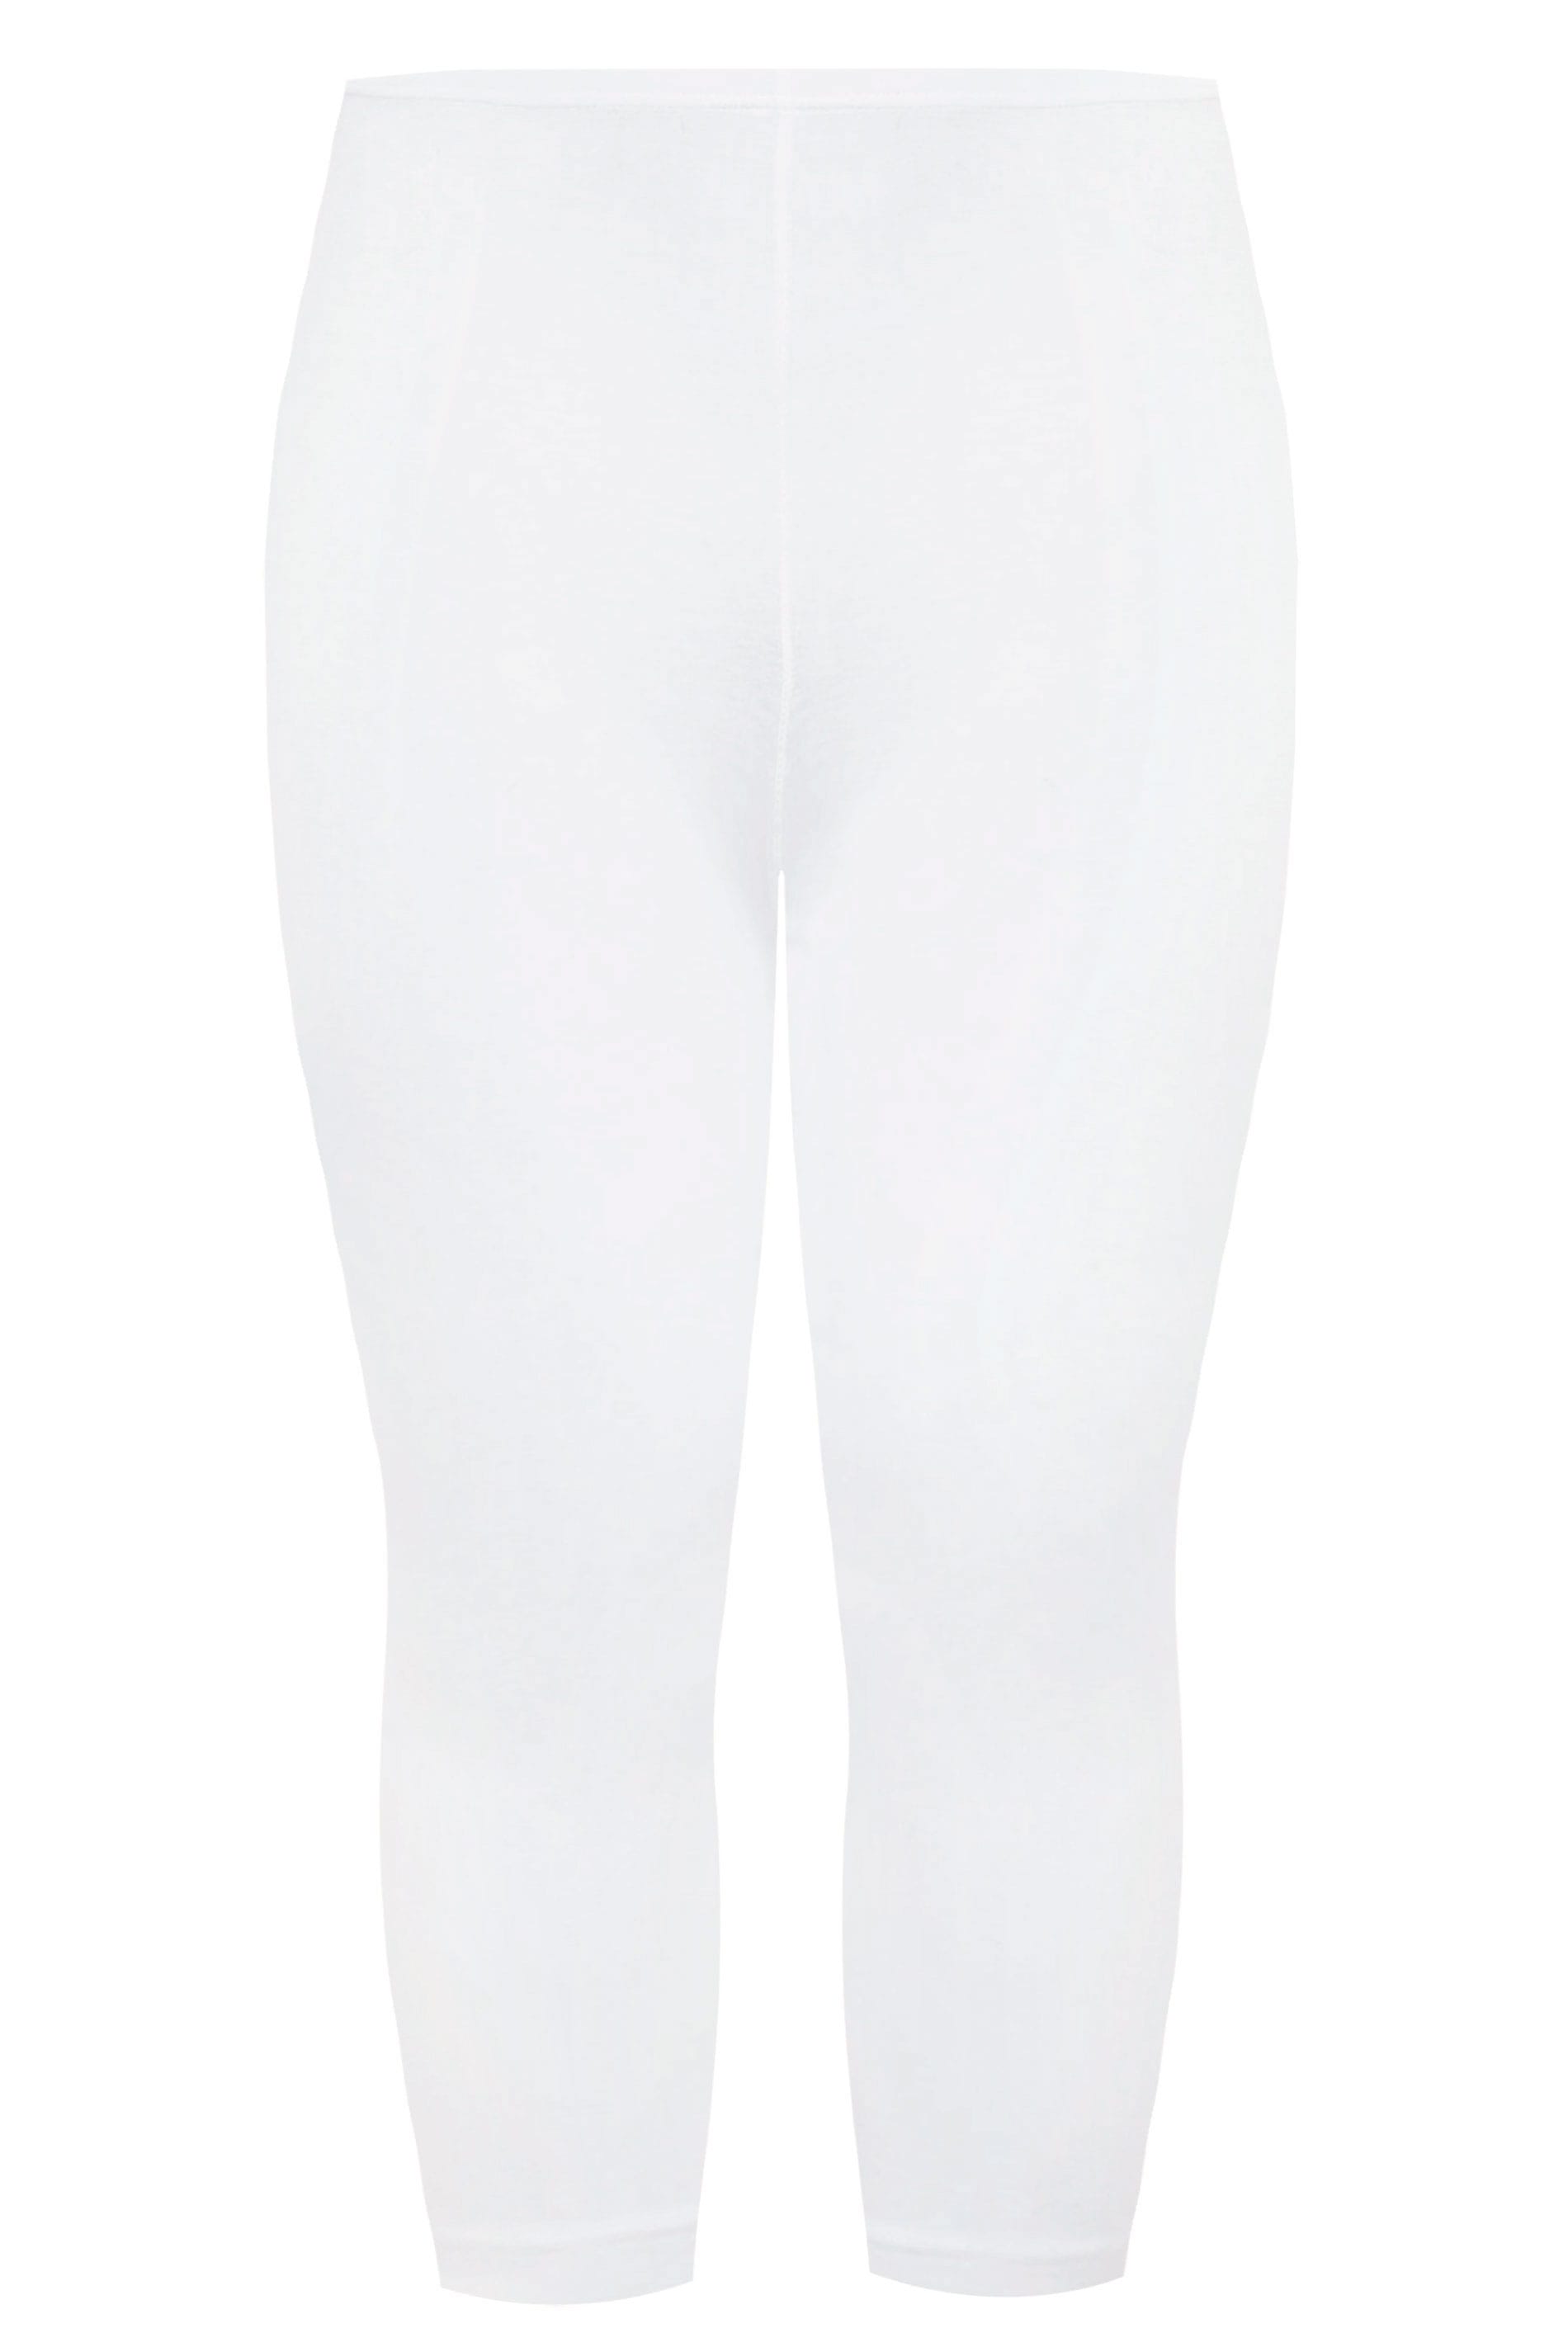 White Mark Women's Plus Size Super Soft Capri Leggings